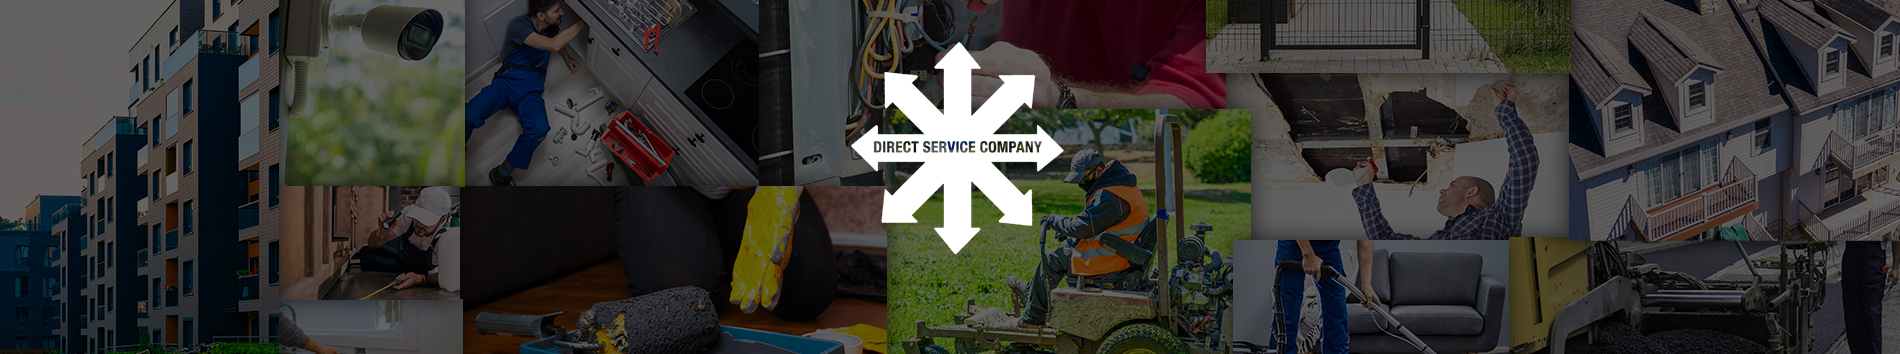 Direct Service Company